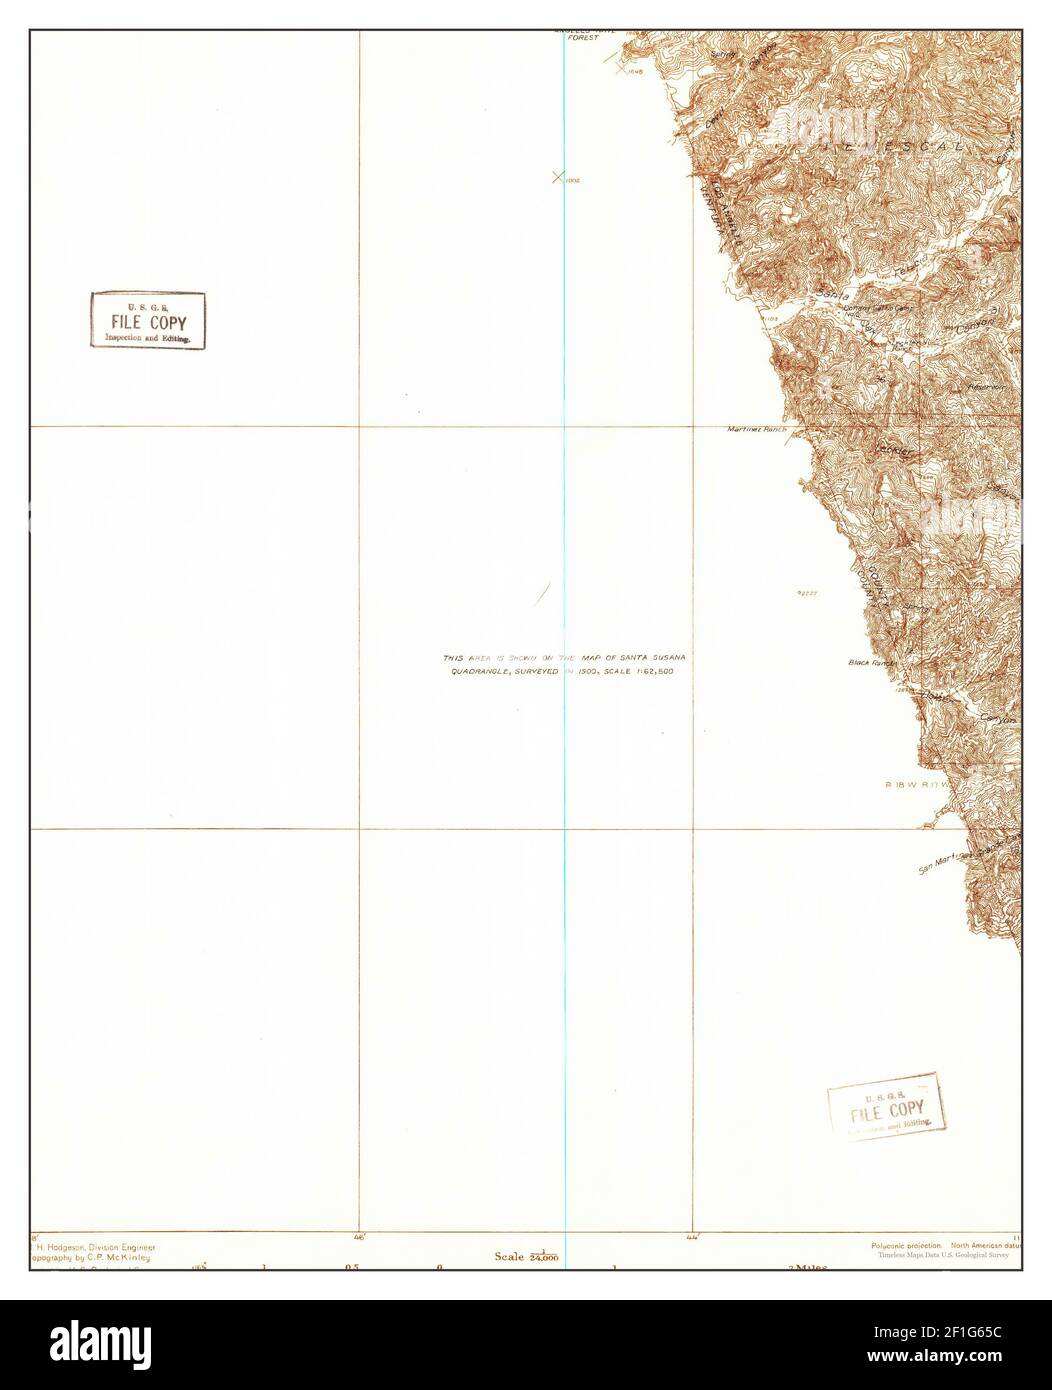 Santa Felicia Canyon, California, map 1931, 1:24000, United States of America by Timeless Maps, data U.S. Geological Survey Stock Photo